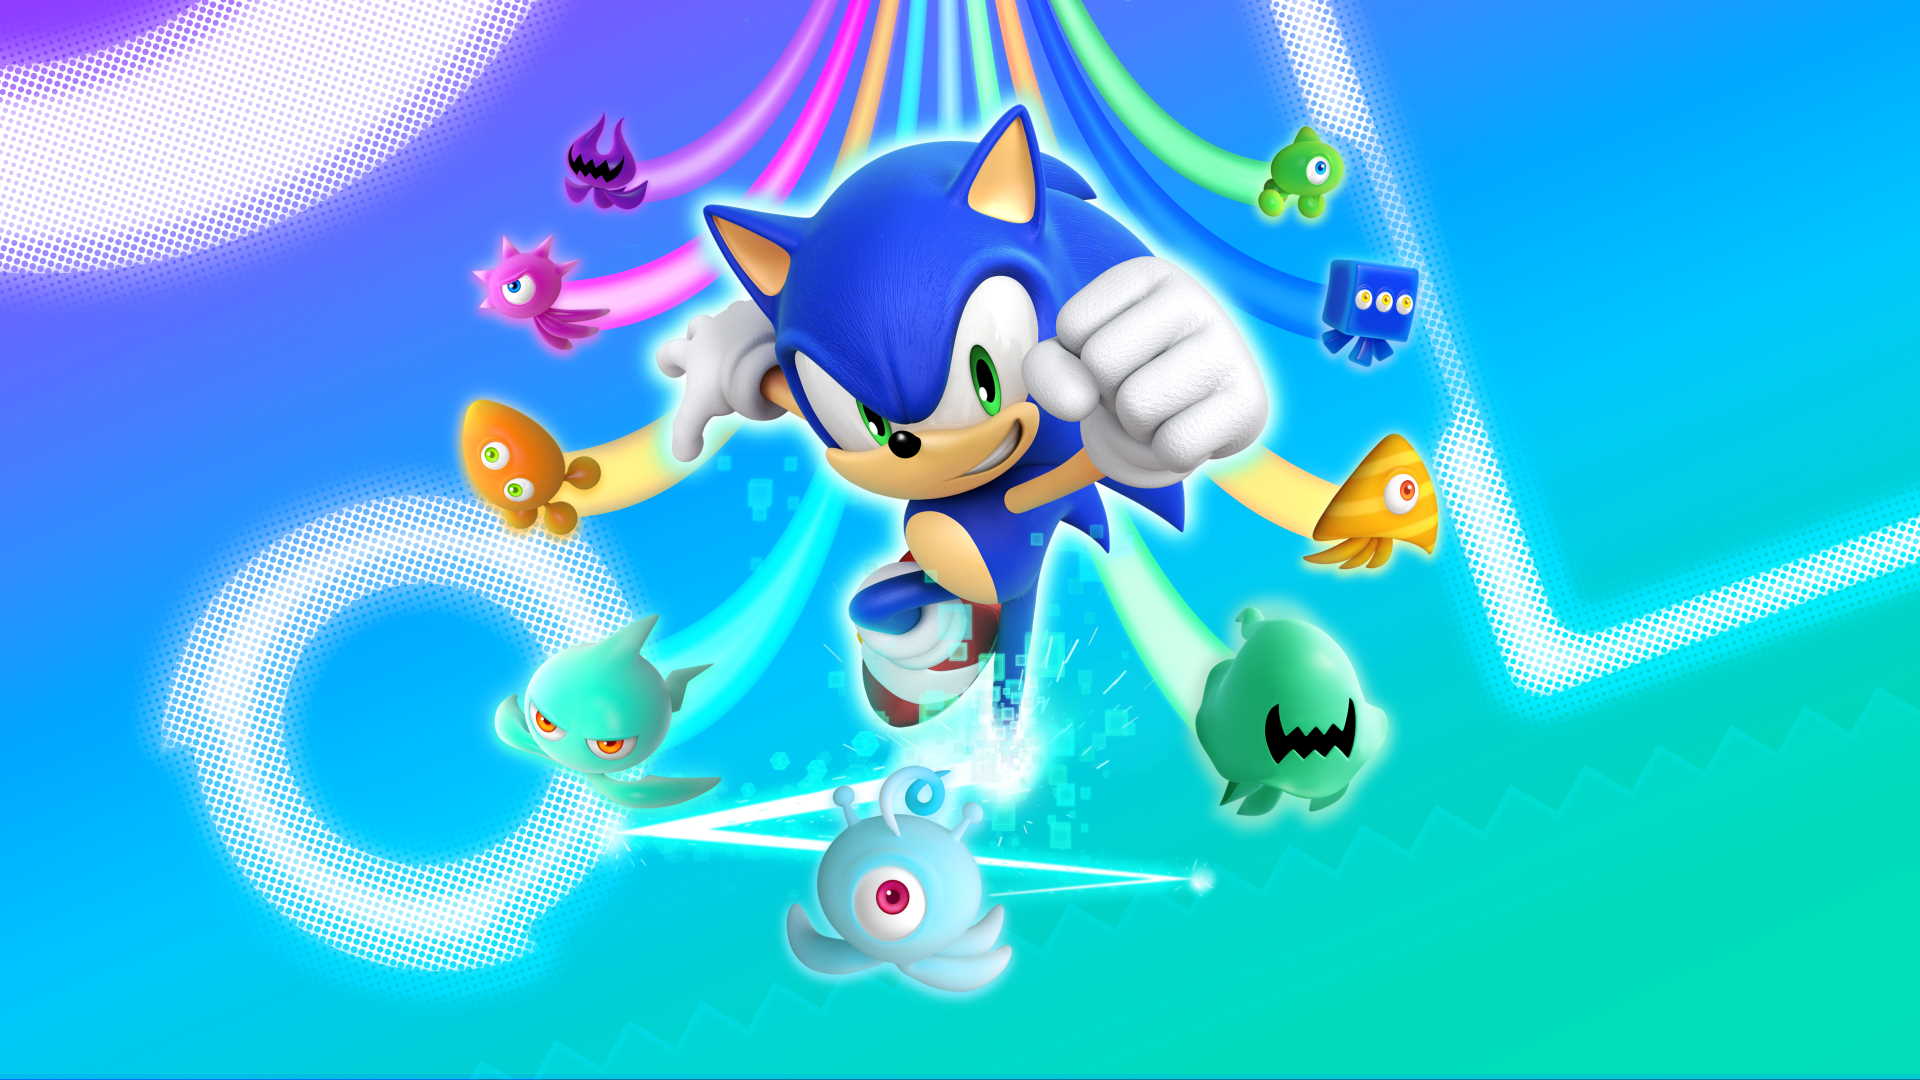 Chaos Sonic vs Metal Sonic. (Sonic Prime spoilers) SPOILERS